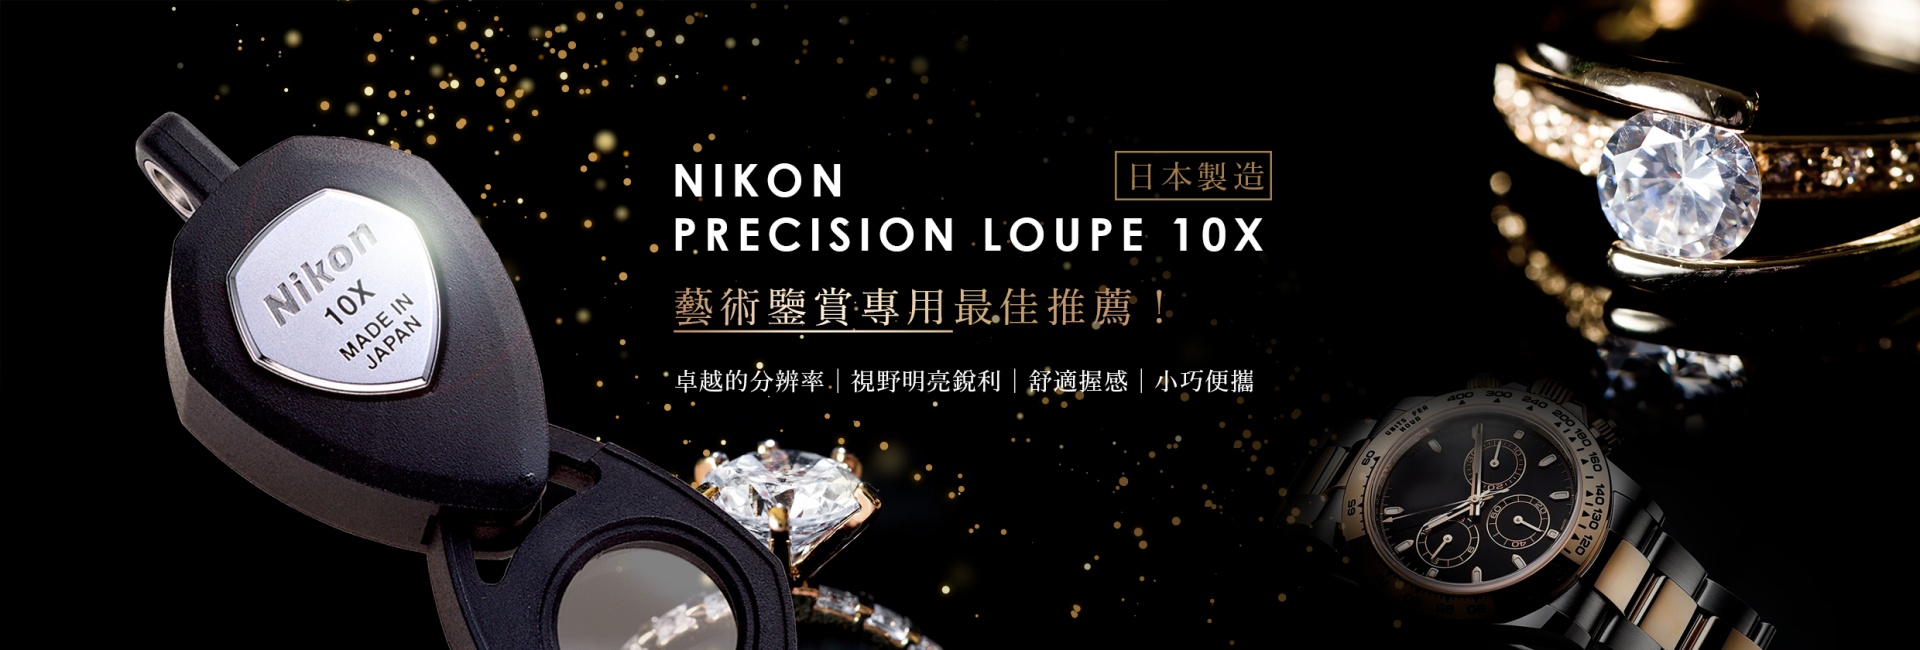 Precision Loupe 10x 珠寶鏡